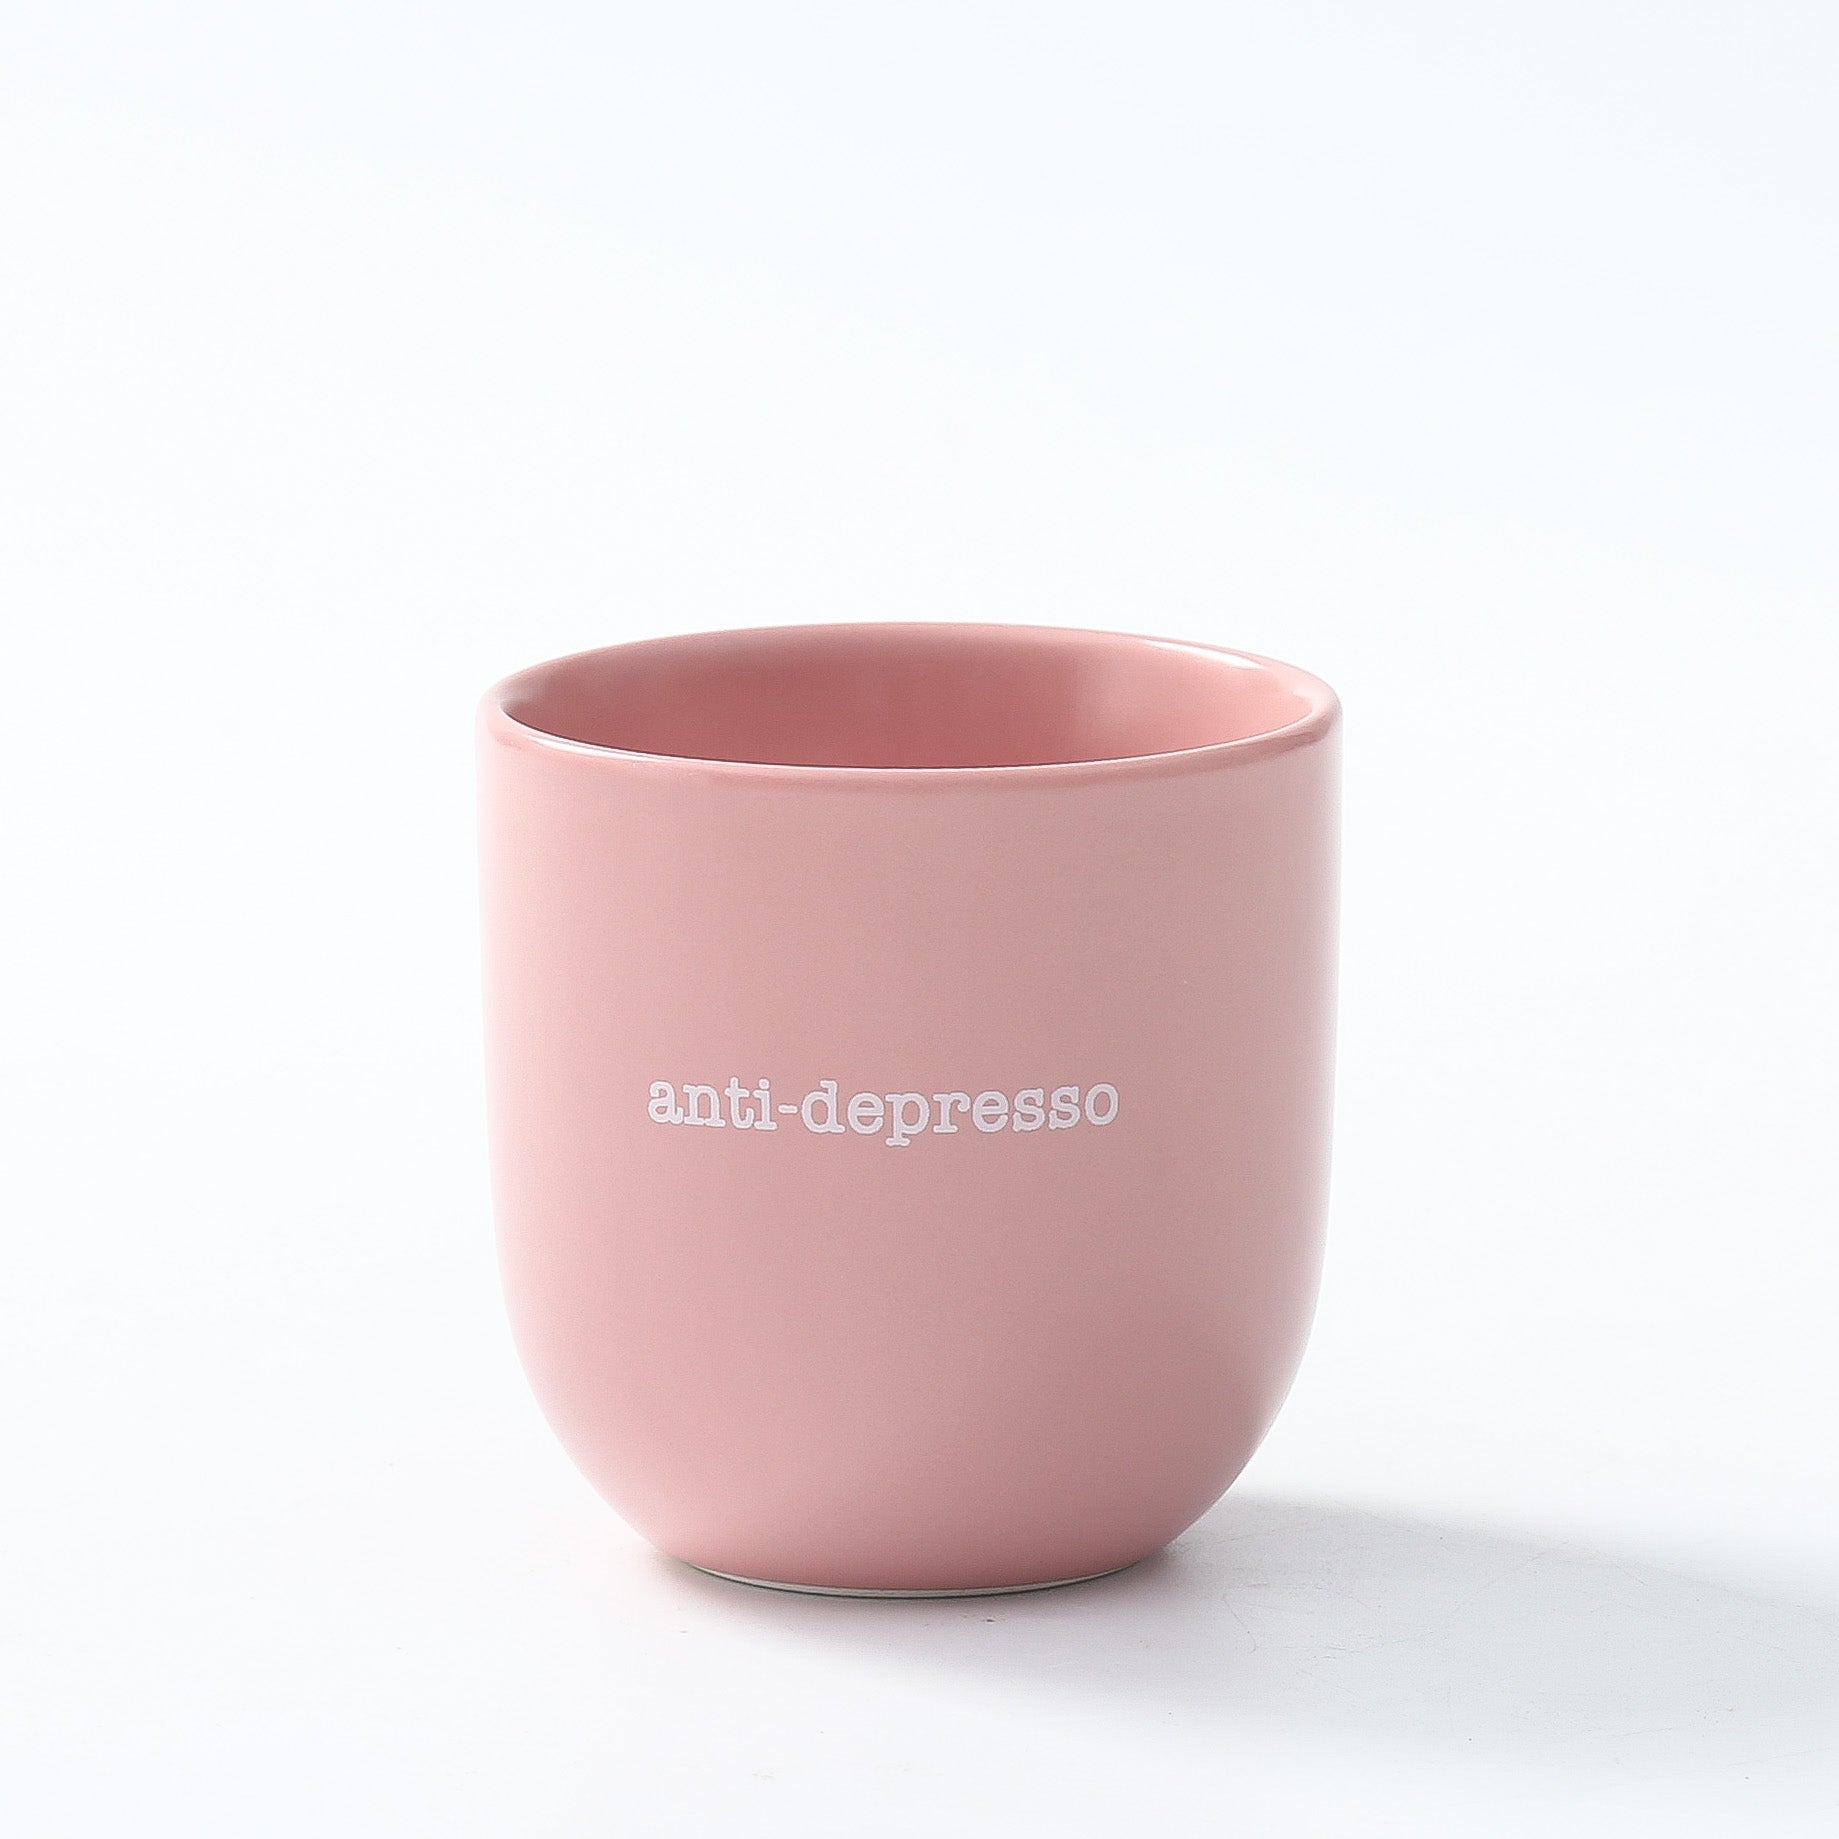 Šalica - Anti-depresso, light pink